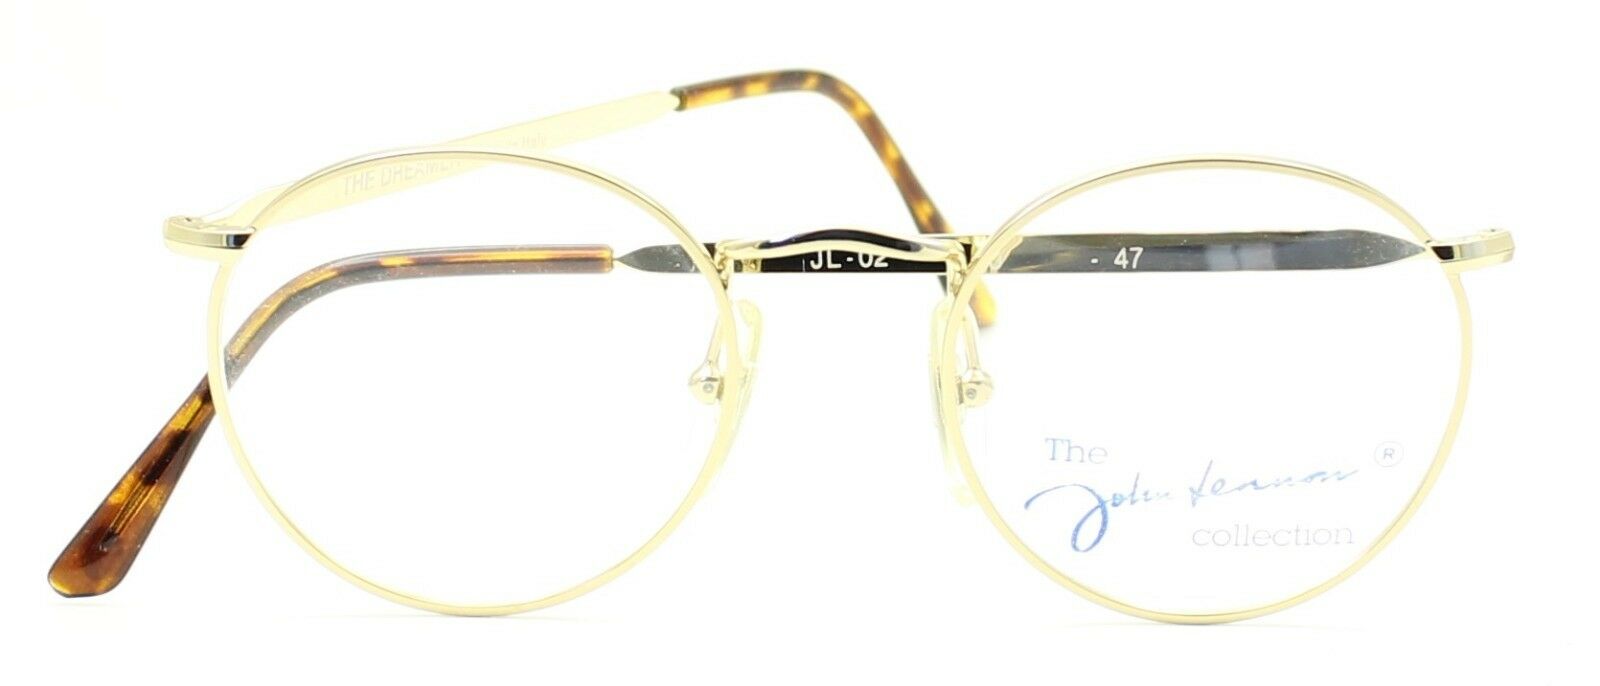 JOHN LENNON JL-02 40 THE DREAMER Vintage Gents Eyewear RX Optical FRAMES Glasses